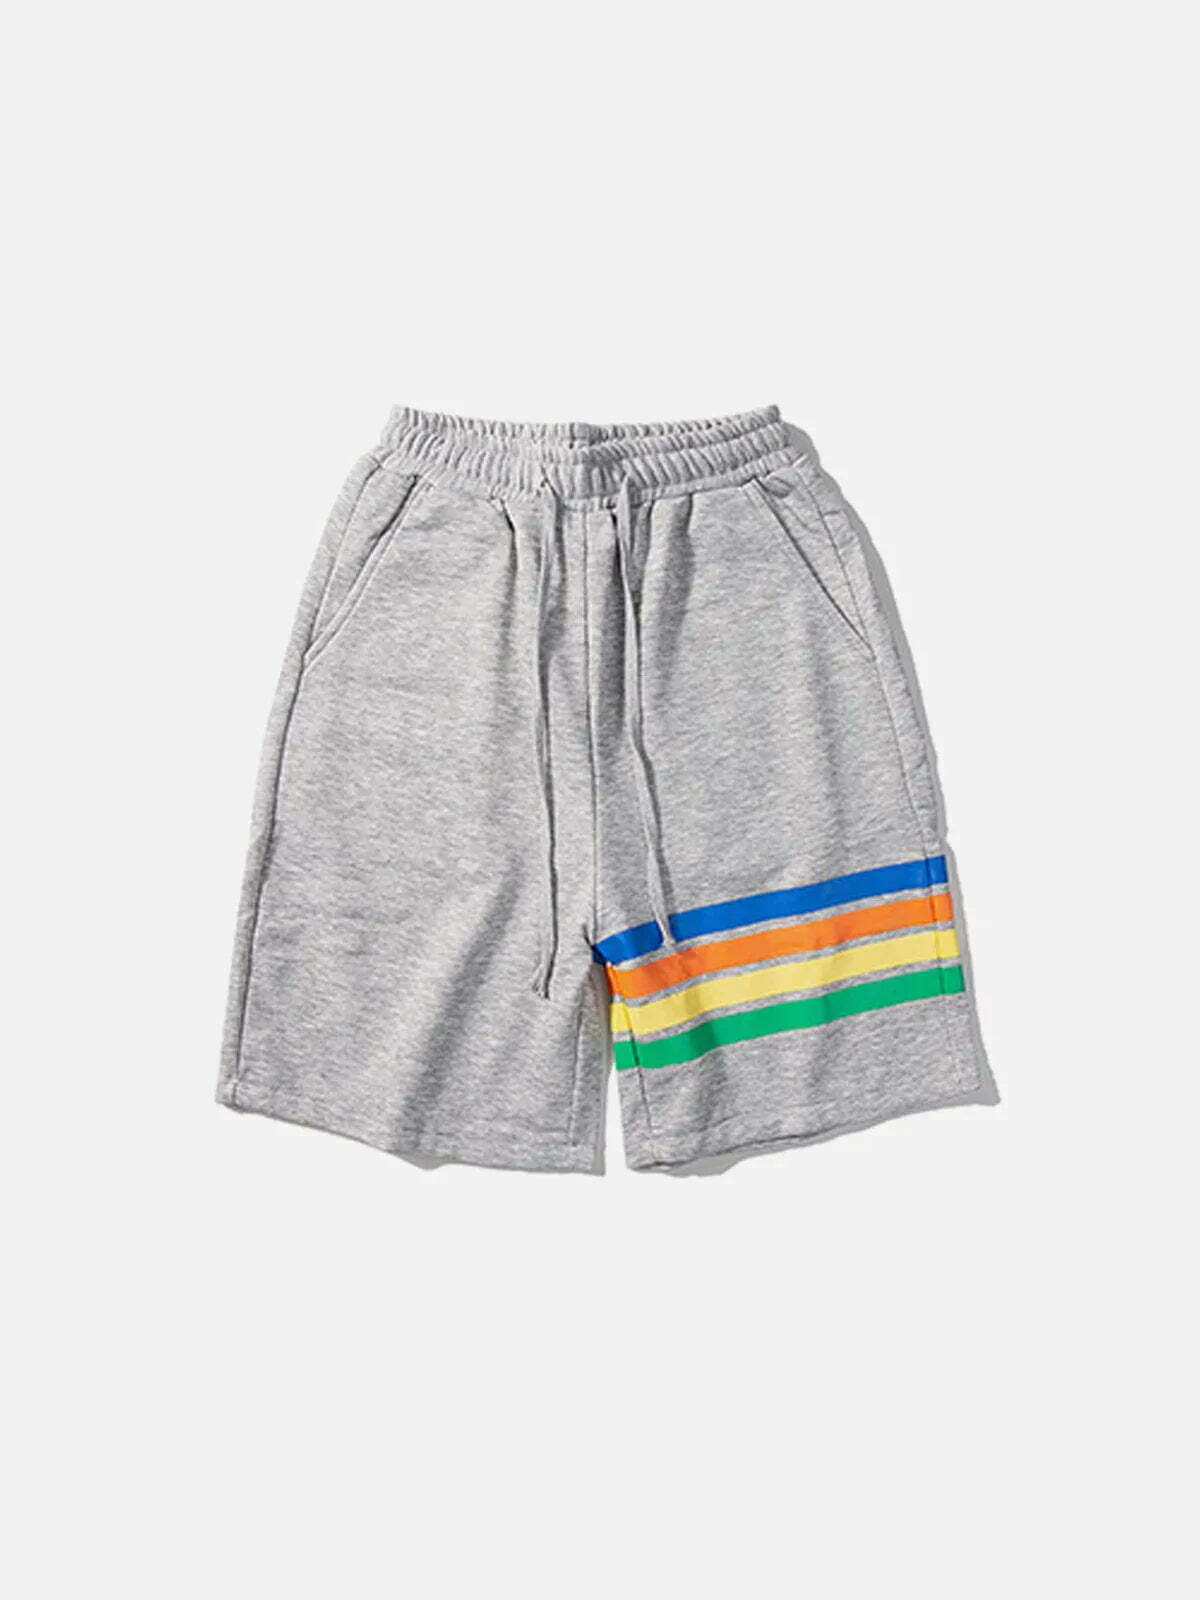 sleek striped drawstring shorts urban chic essential 7754